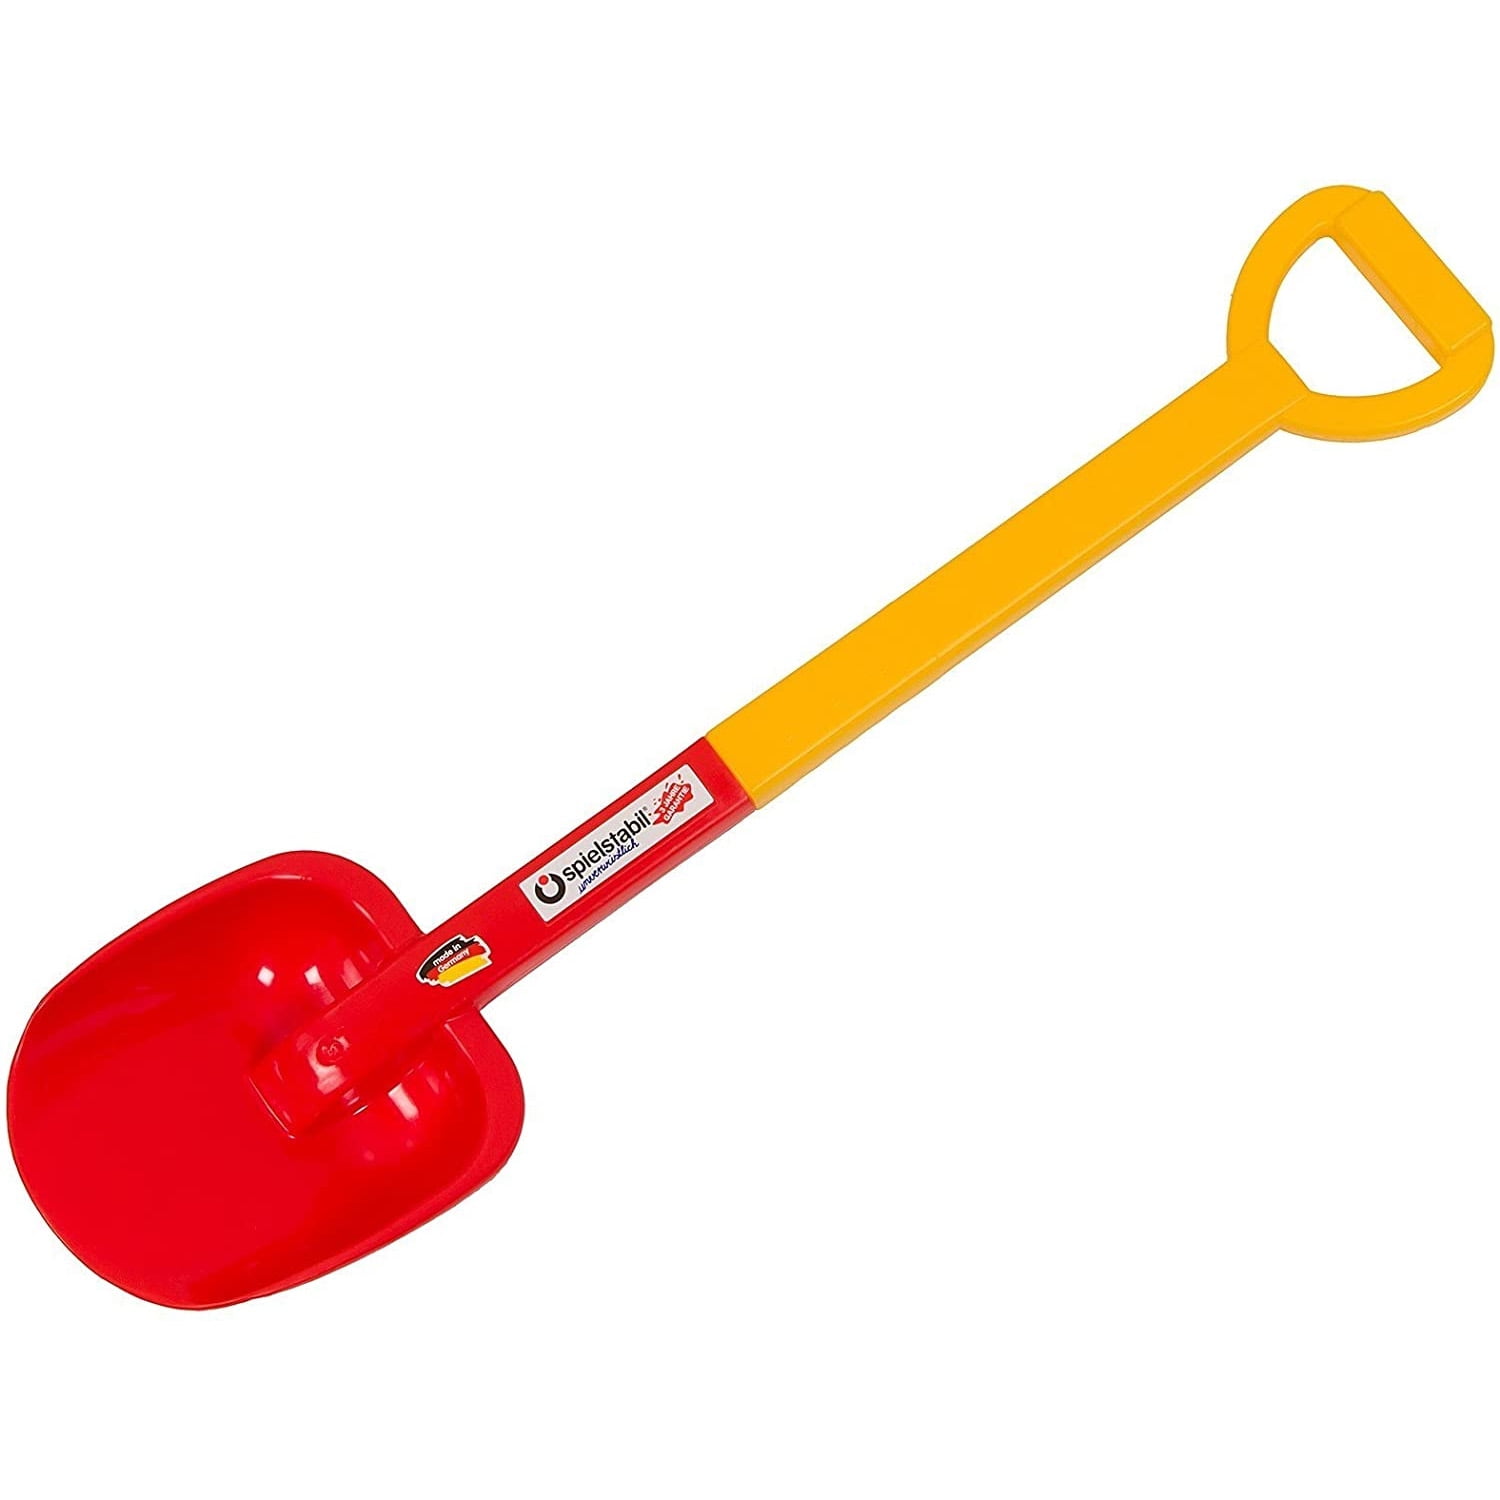 2 x DANTOY ROBUST SUPER SCOOP 23cm RED BLUE YELLOW play kids sandpit sand shovel 